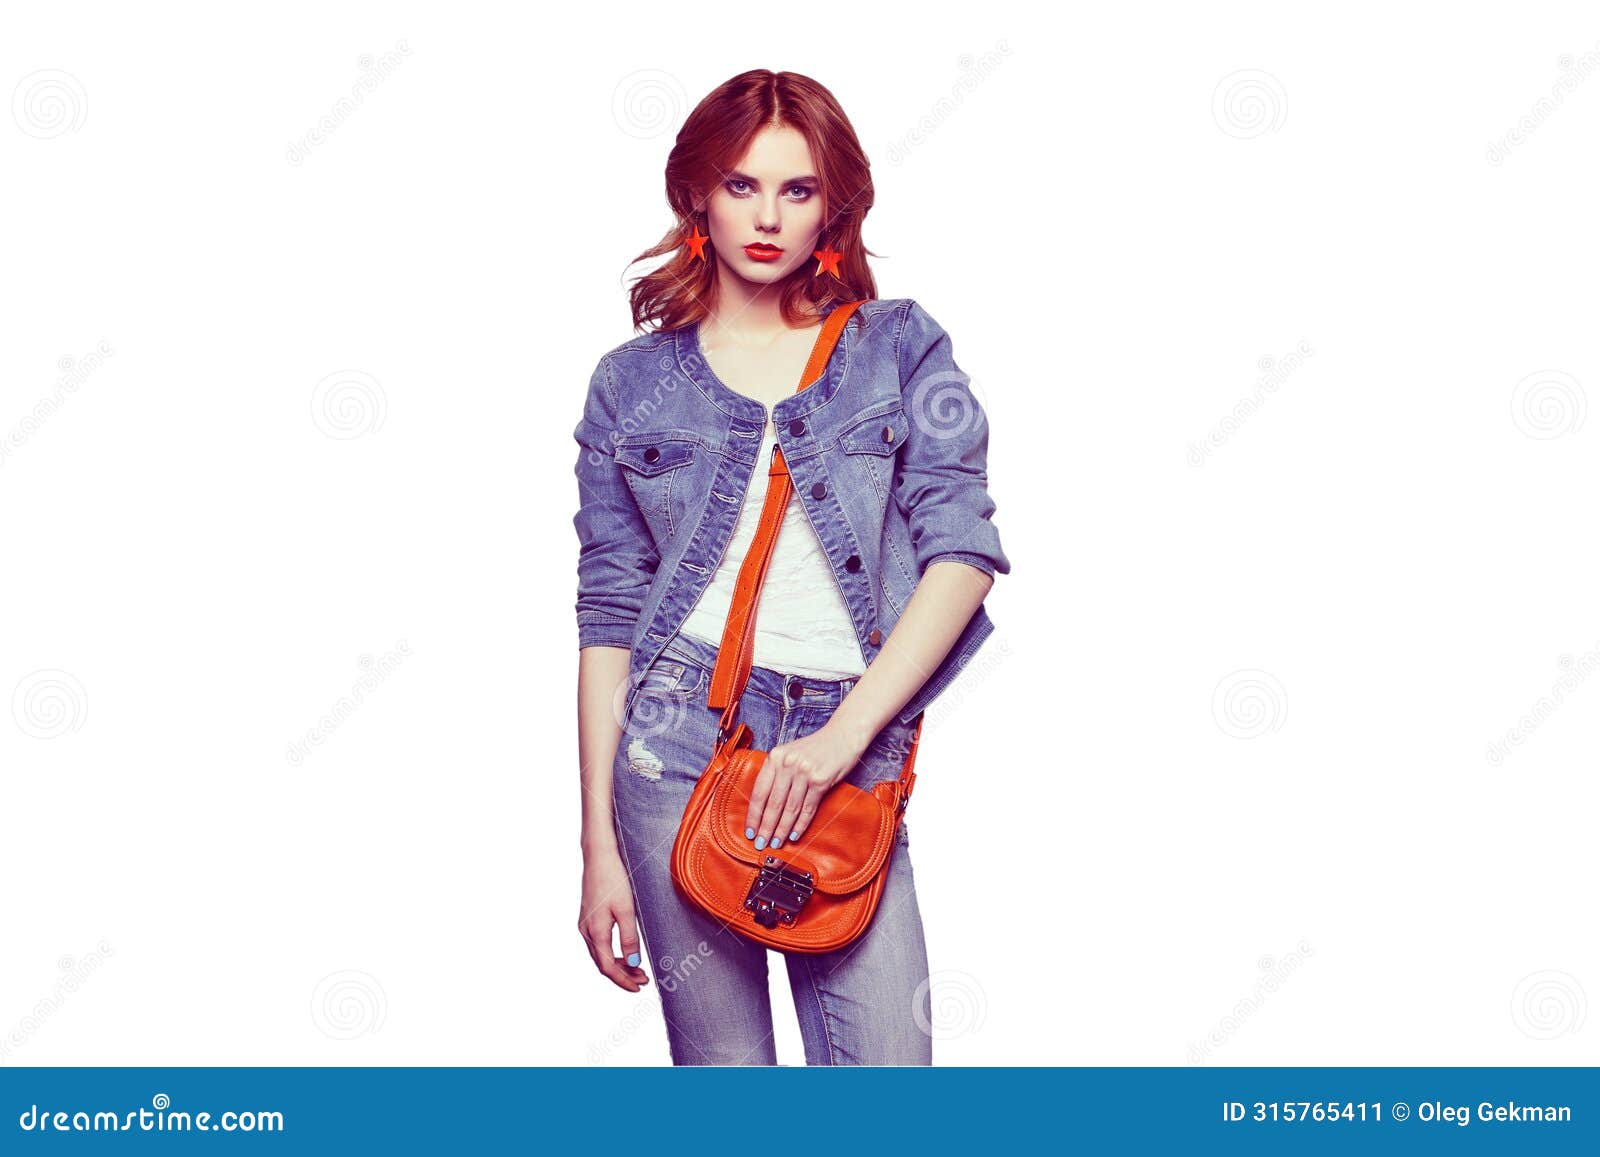 fashion portrait of beautiful young woman with handbag